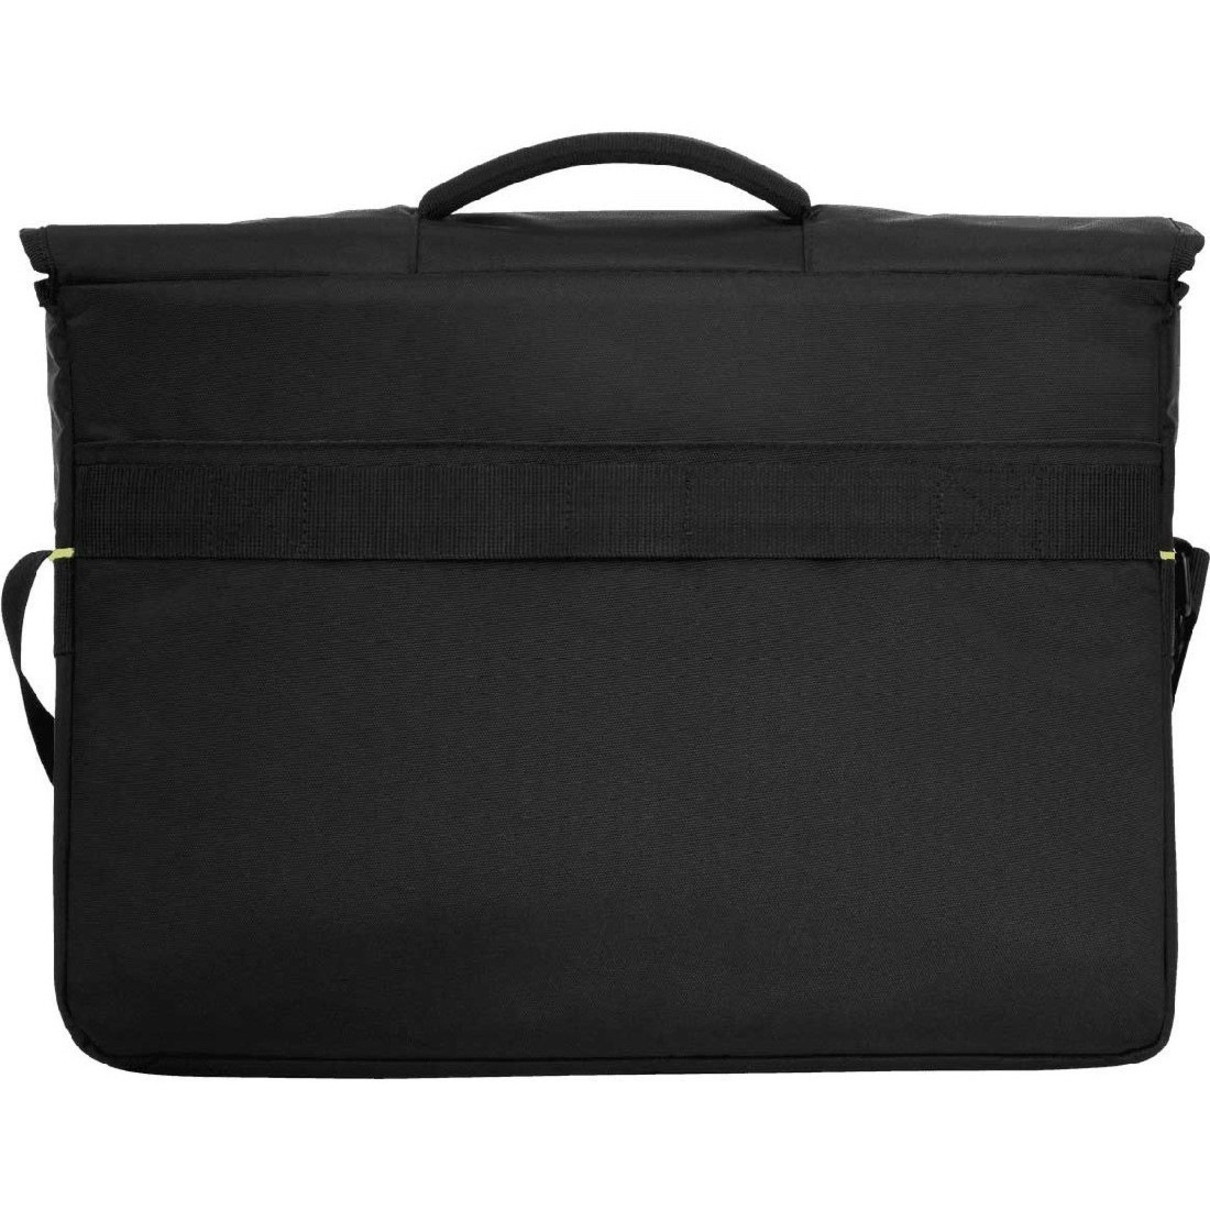 Targus CityGear II TCG270 Carrying Case (Messenger) for 15.6″ to 17″ NotebookBlack, GrayShock AbsorbingPolyurethane, Poly BodyTrolley… TCG270